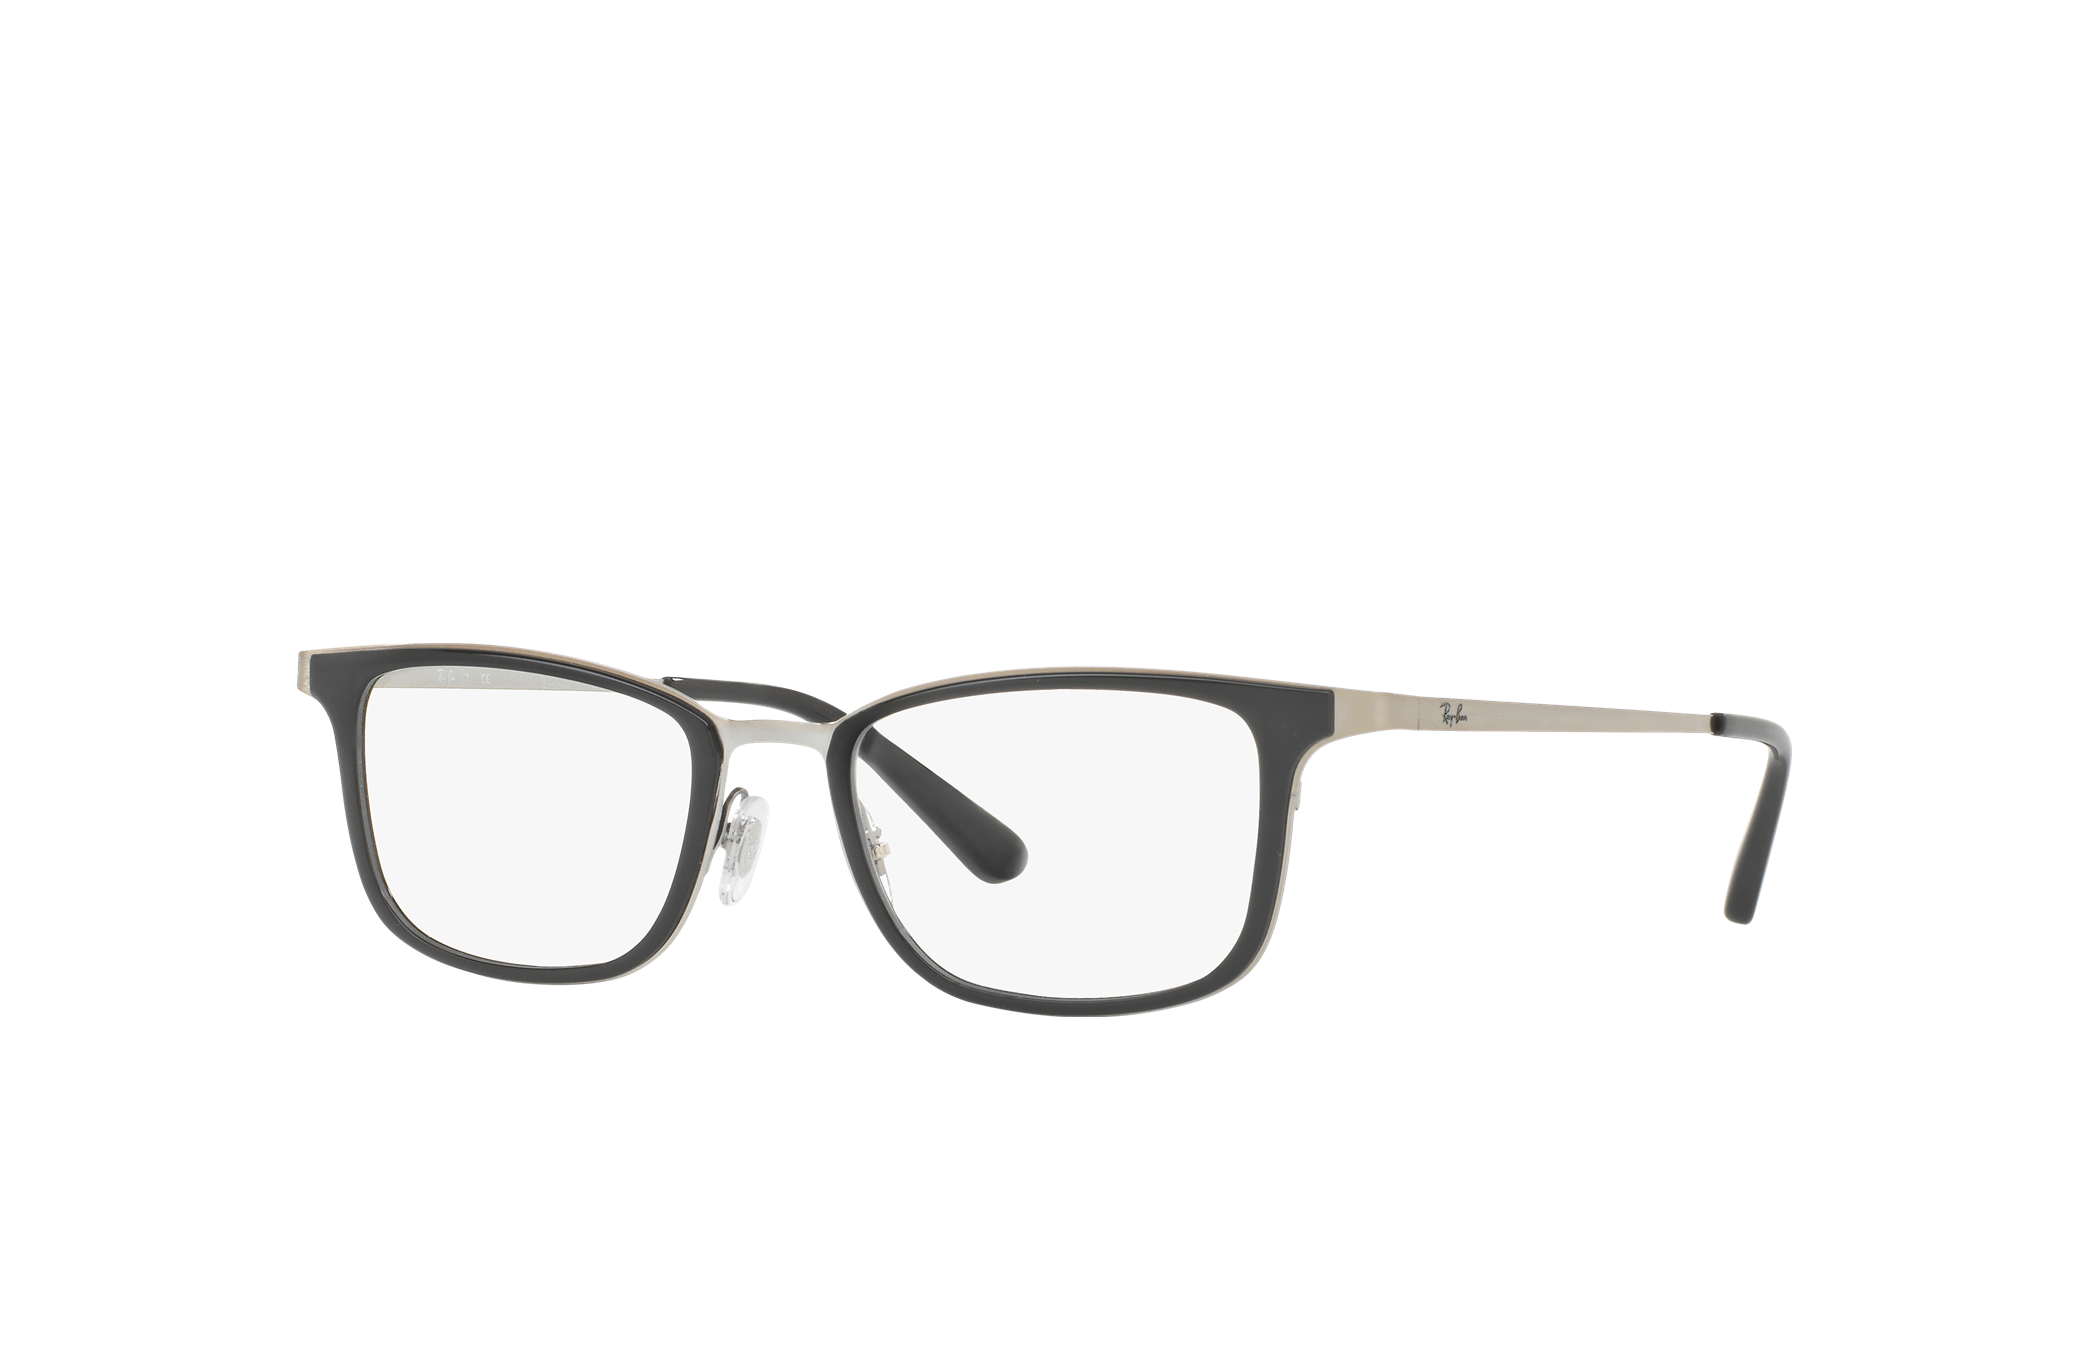 Rb6373m Optics Eyeglasses with Gunmetal Frame - RB6373M | Ray-Ban® US